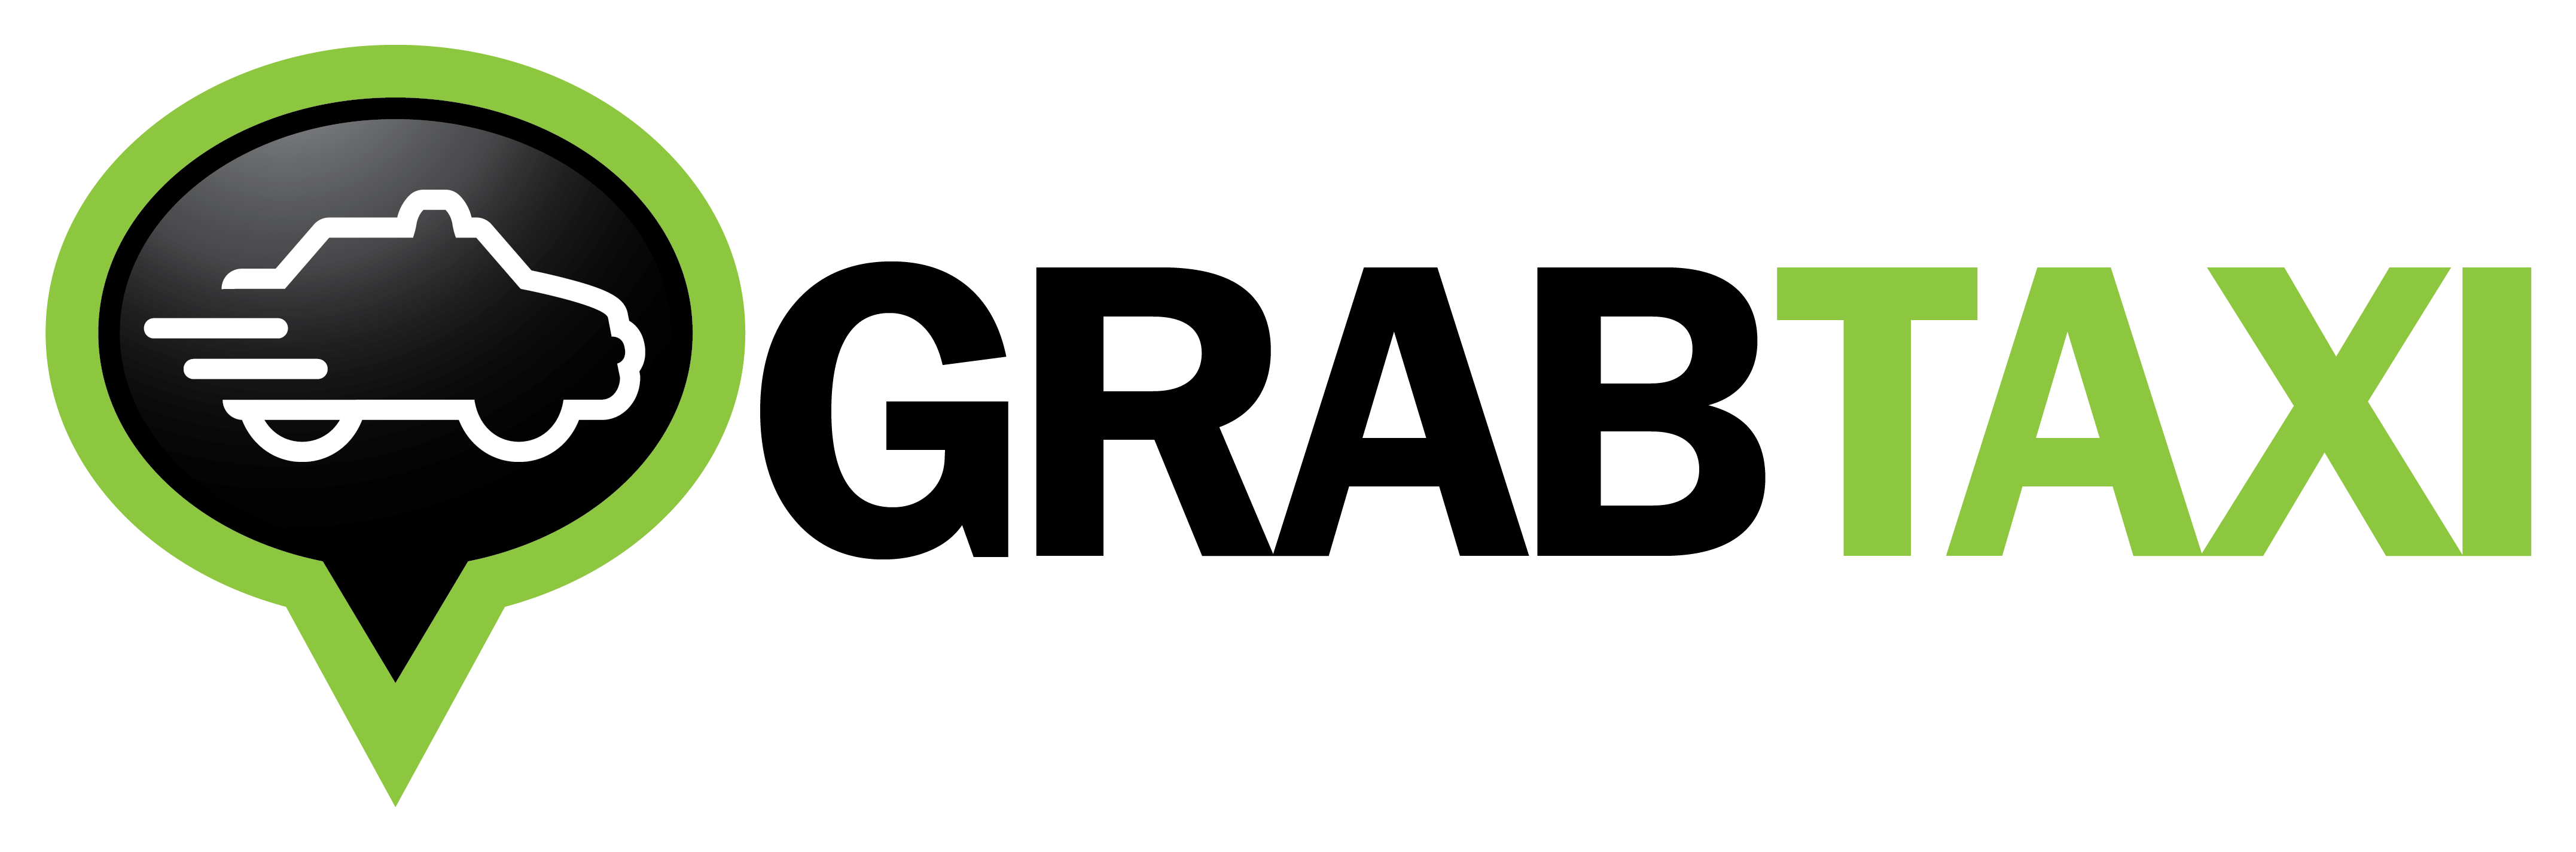 Grab Logo - Grab logo png 5 » PNG Image